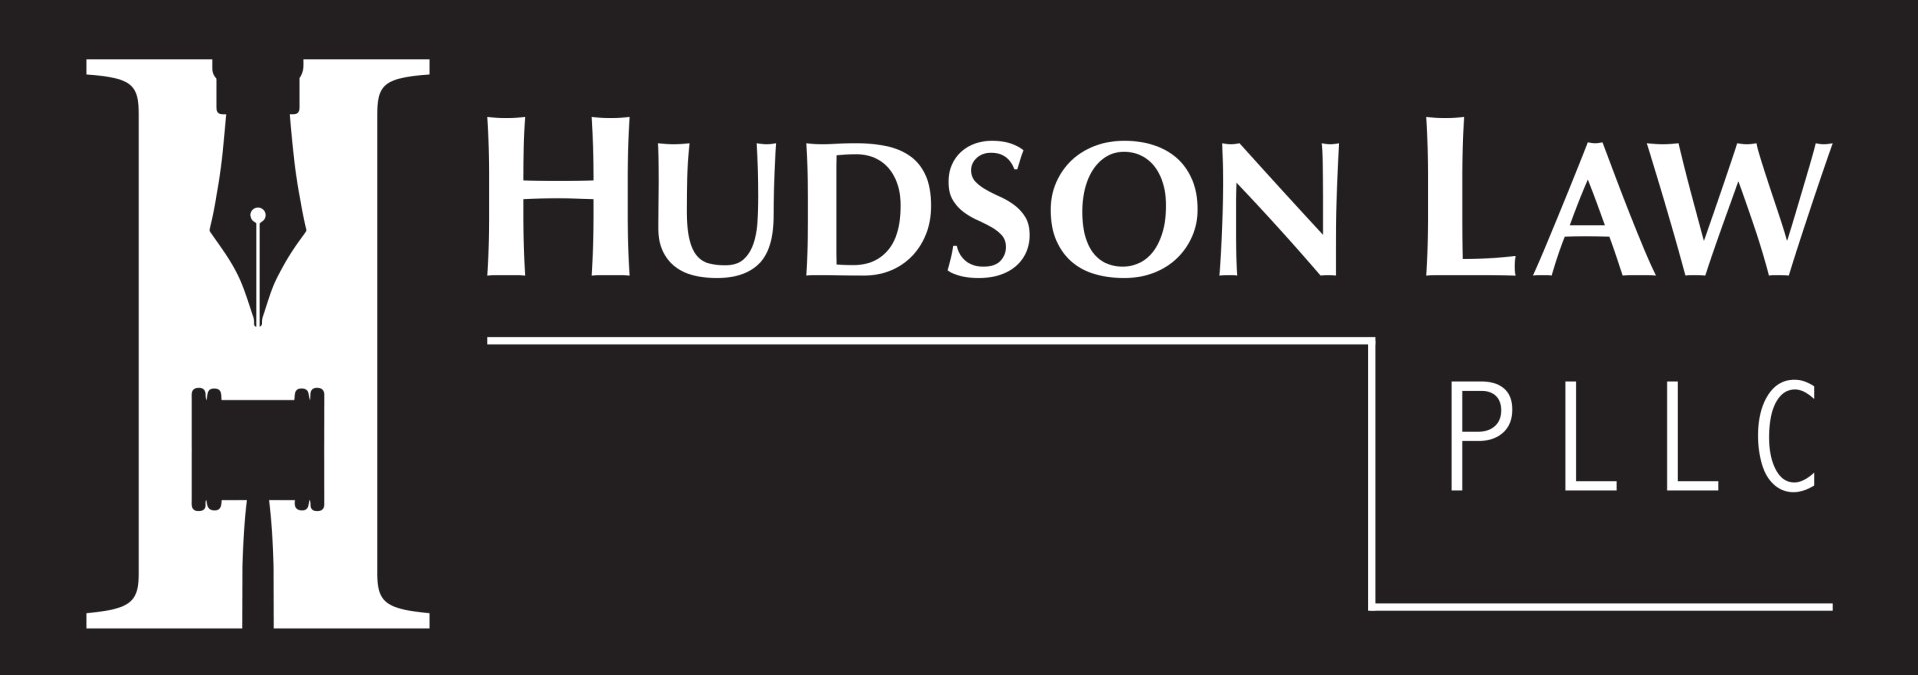 Hudson Law PLLC